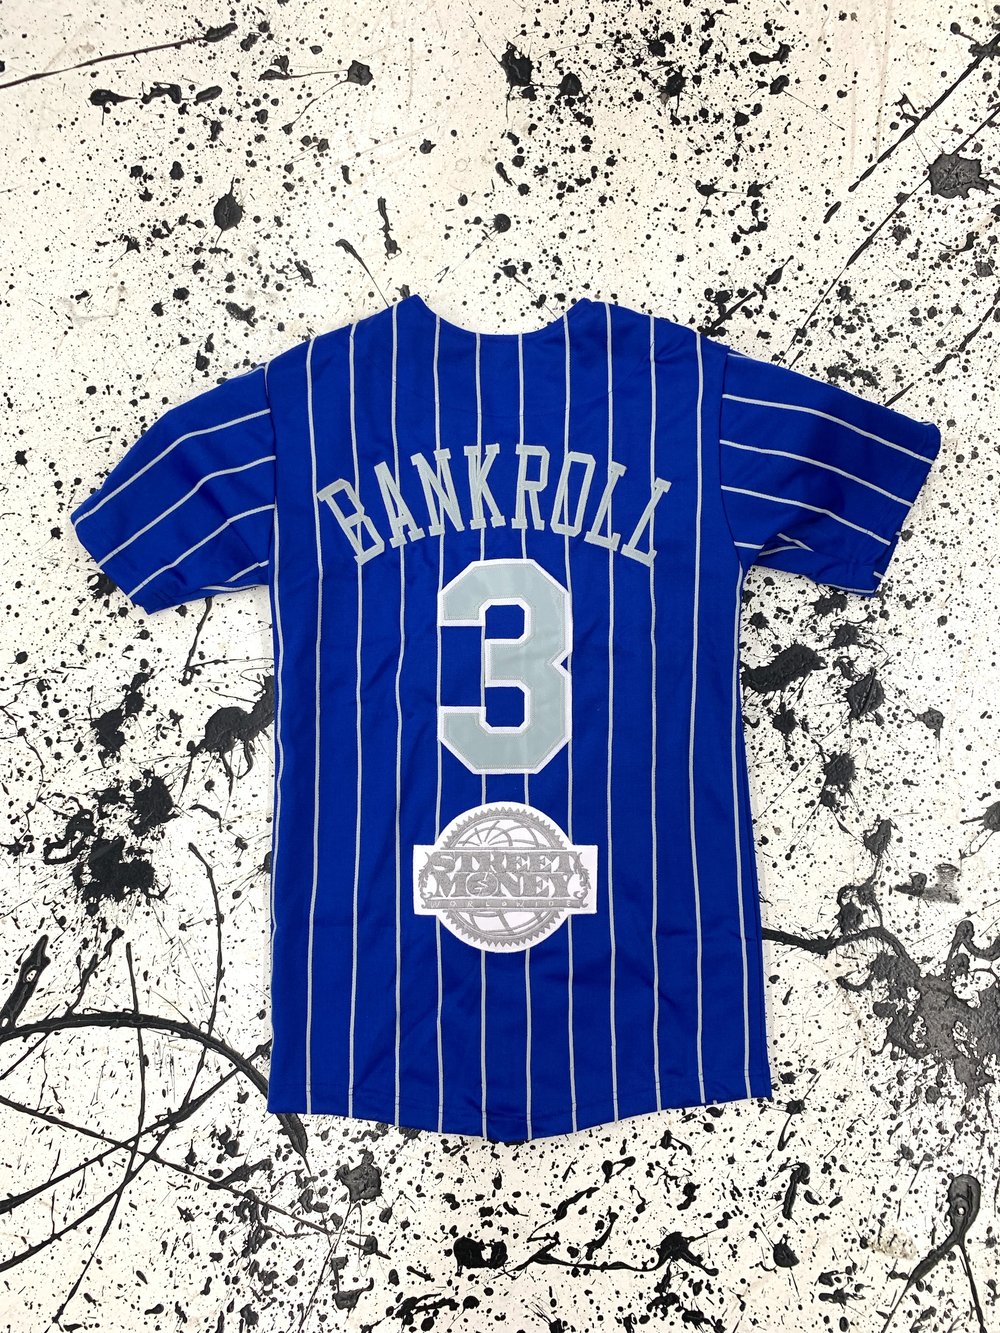 Atlanta Braves Premium Baseball Jersey Shirt Custom Number And Name -  Banantees